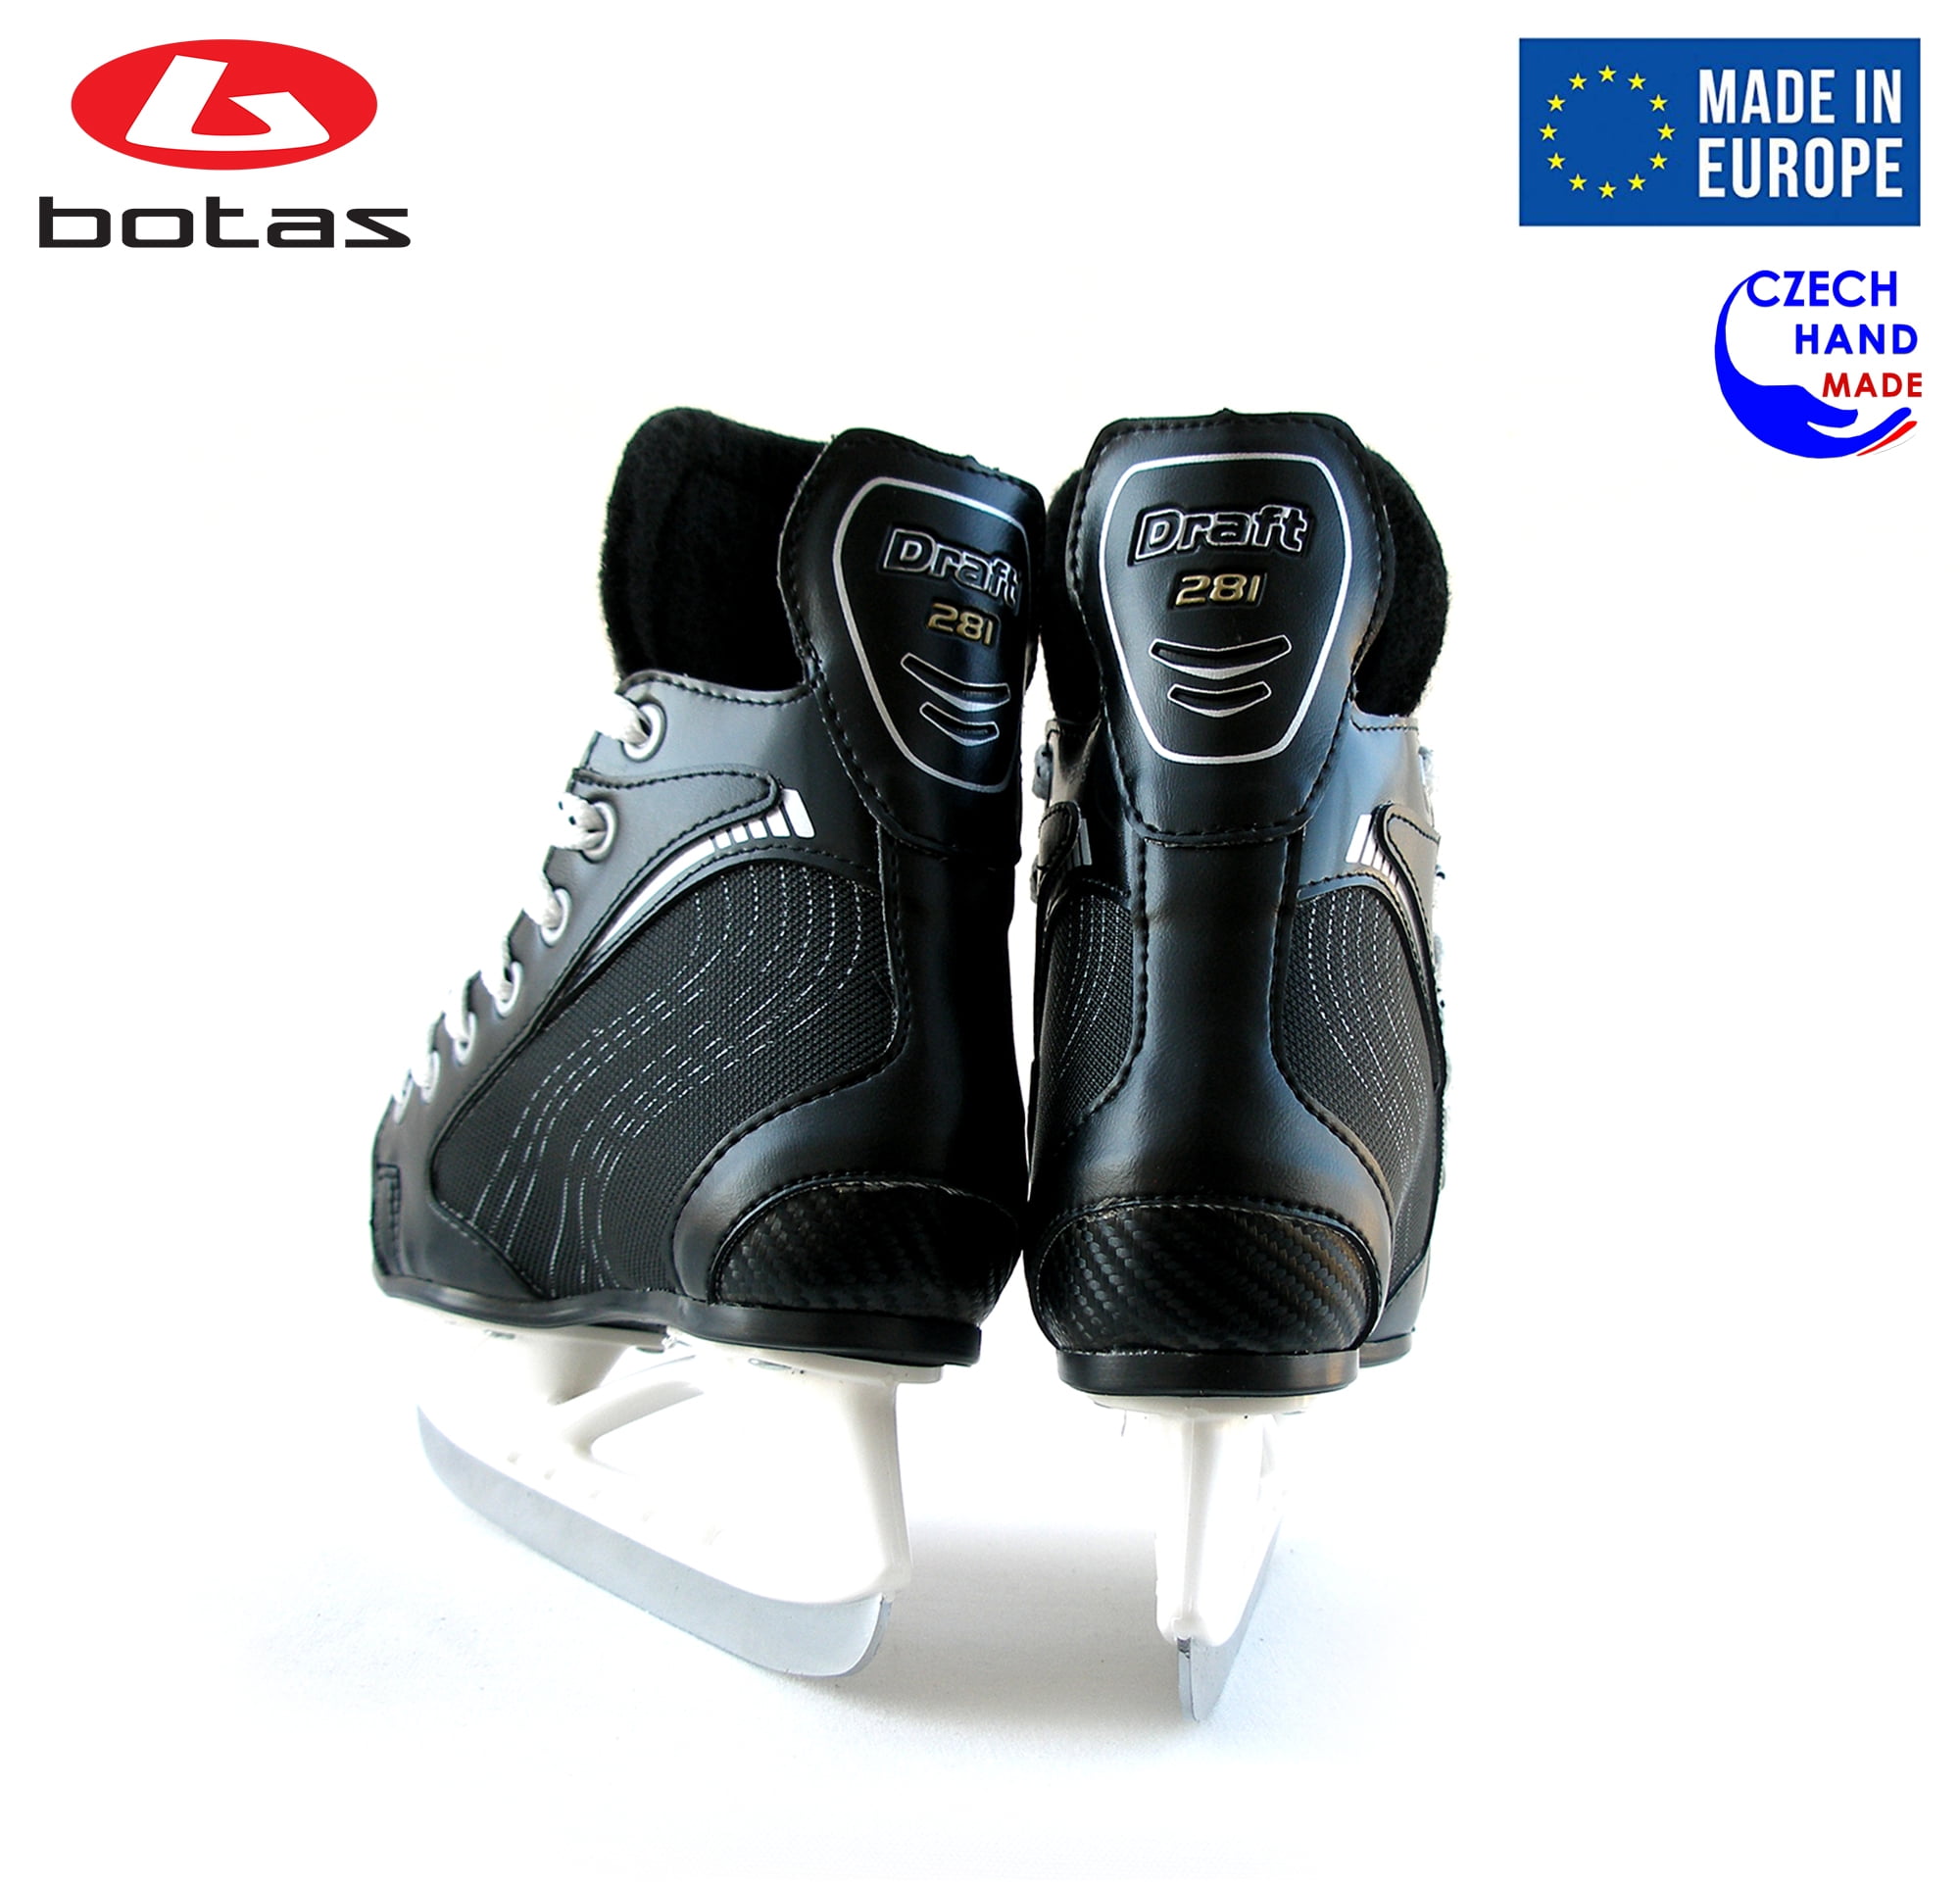 BOTAS - DRAFT 281 - Kids Ice Hockey Skates Made in Europe (Czech Republic) Color Black, Size Child 10